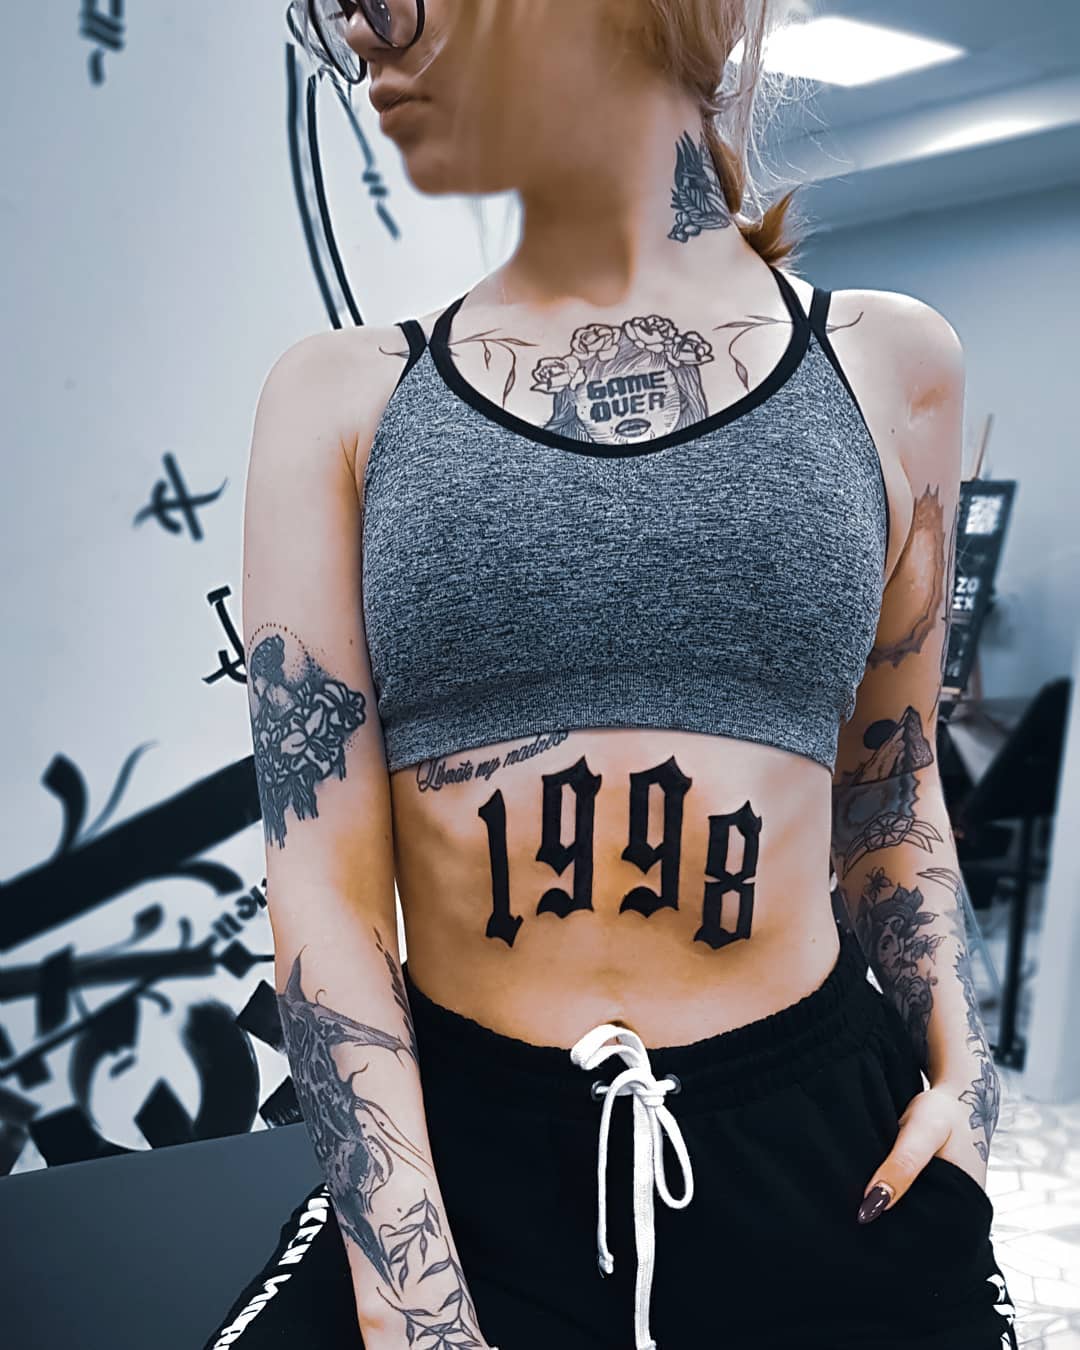 Татуировки надписей на животе